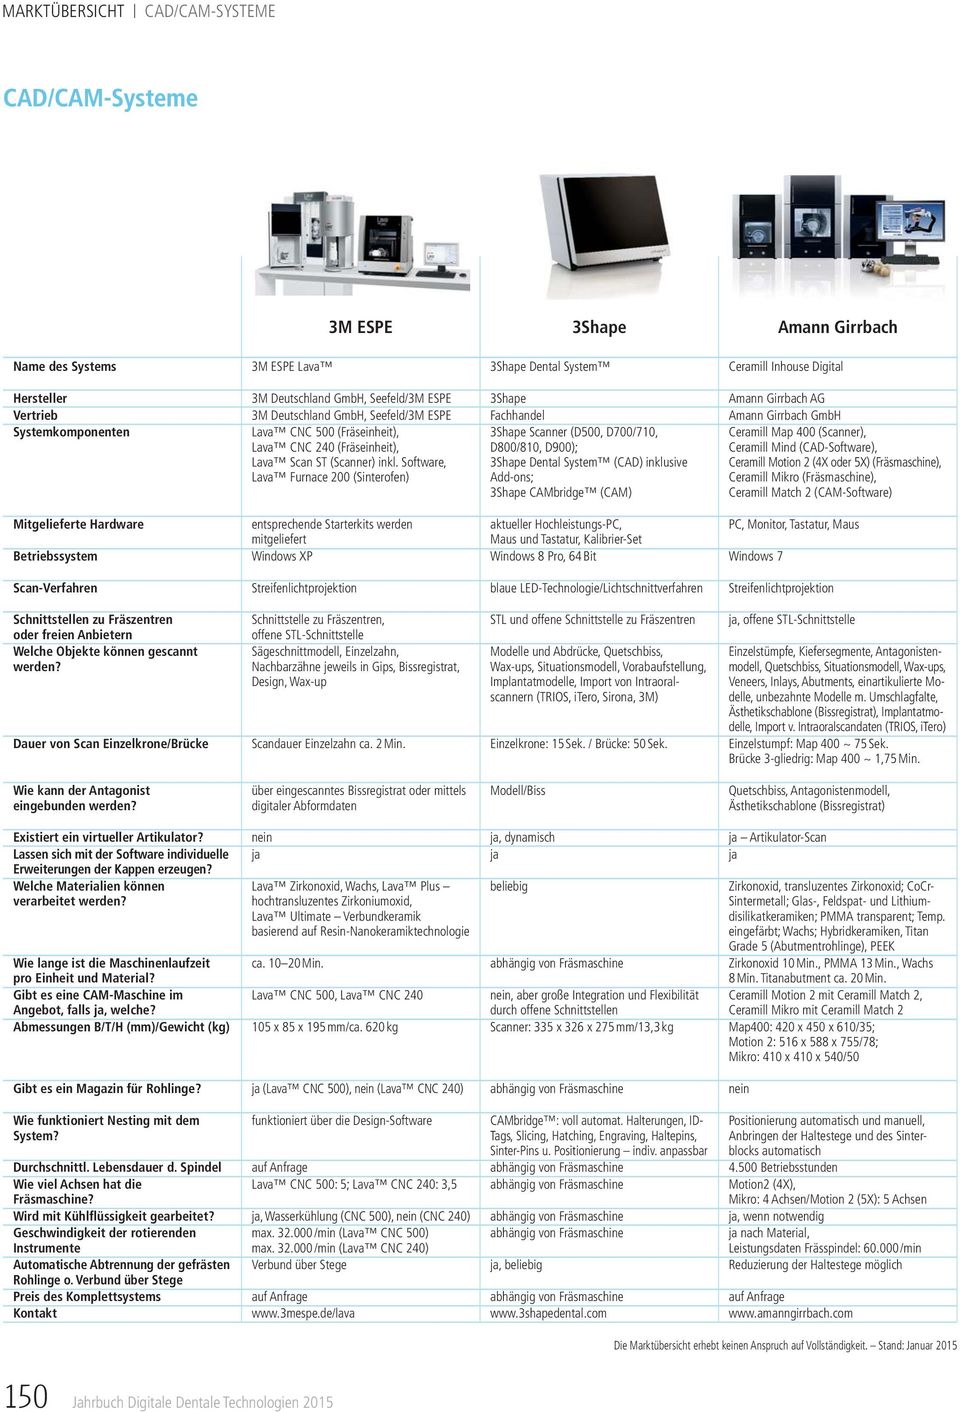 Software, Lava Furnace 200 (Sinterofen) 3Shape Fachhandel 3Shape Scanner (D500, D700/710, D800/810, D900); 3Shape Dental System (CAD) inklusive Add-ons; 3Shape CAMbridge (CAM) Amann Girrbach AG Amann